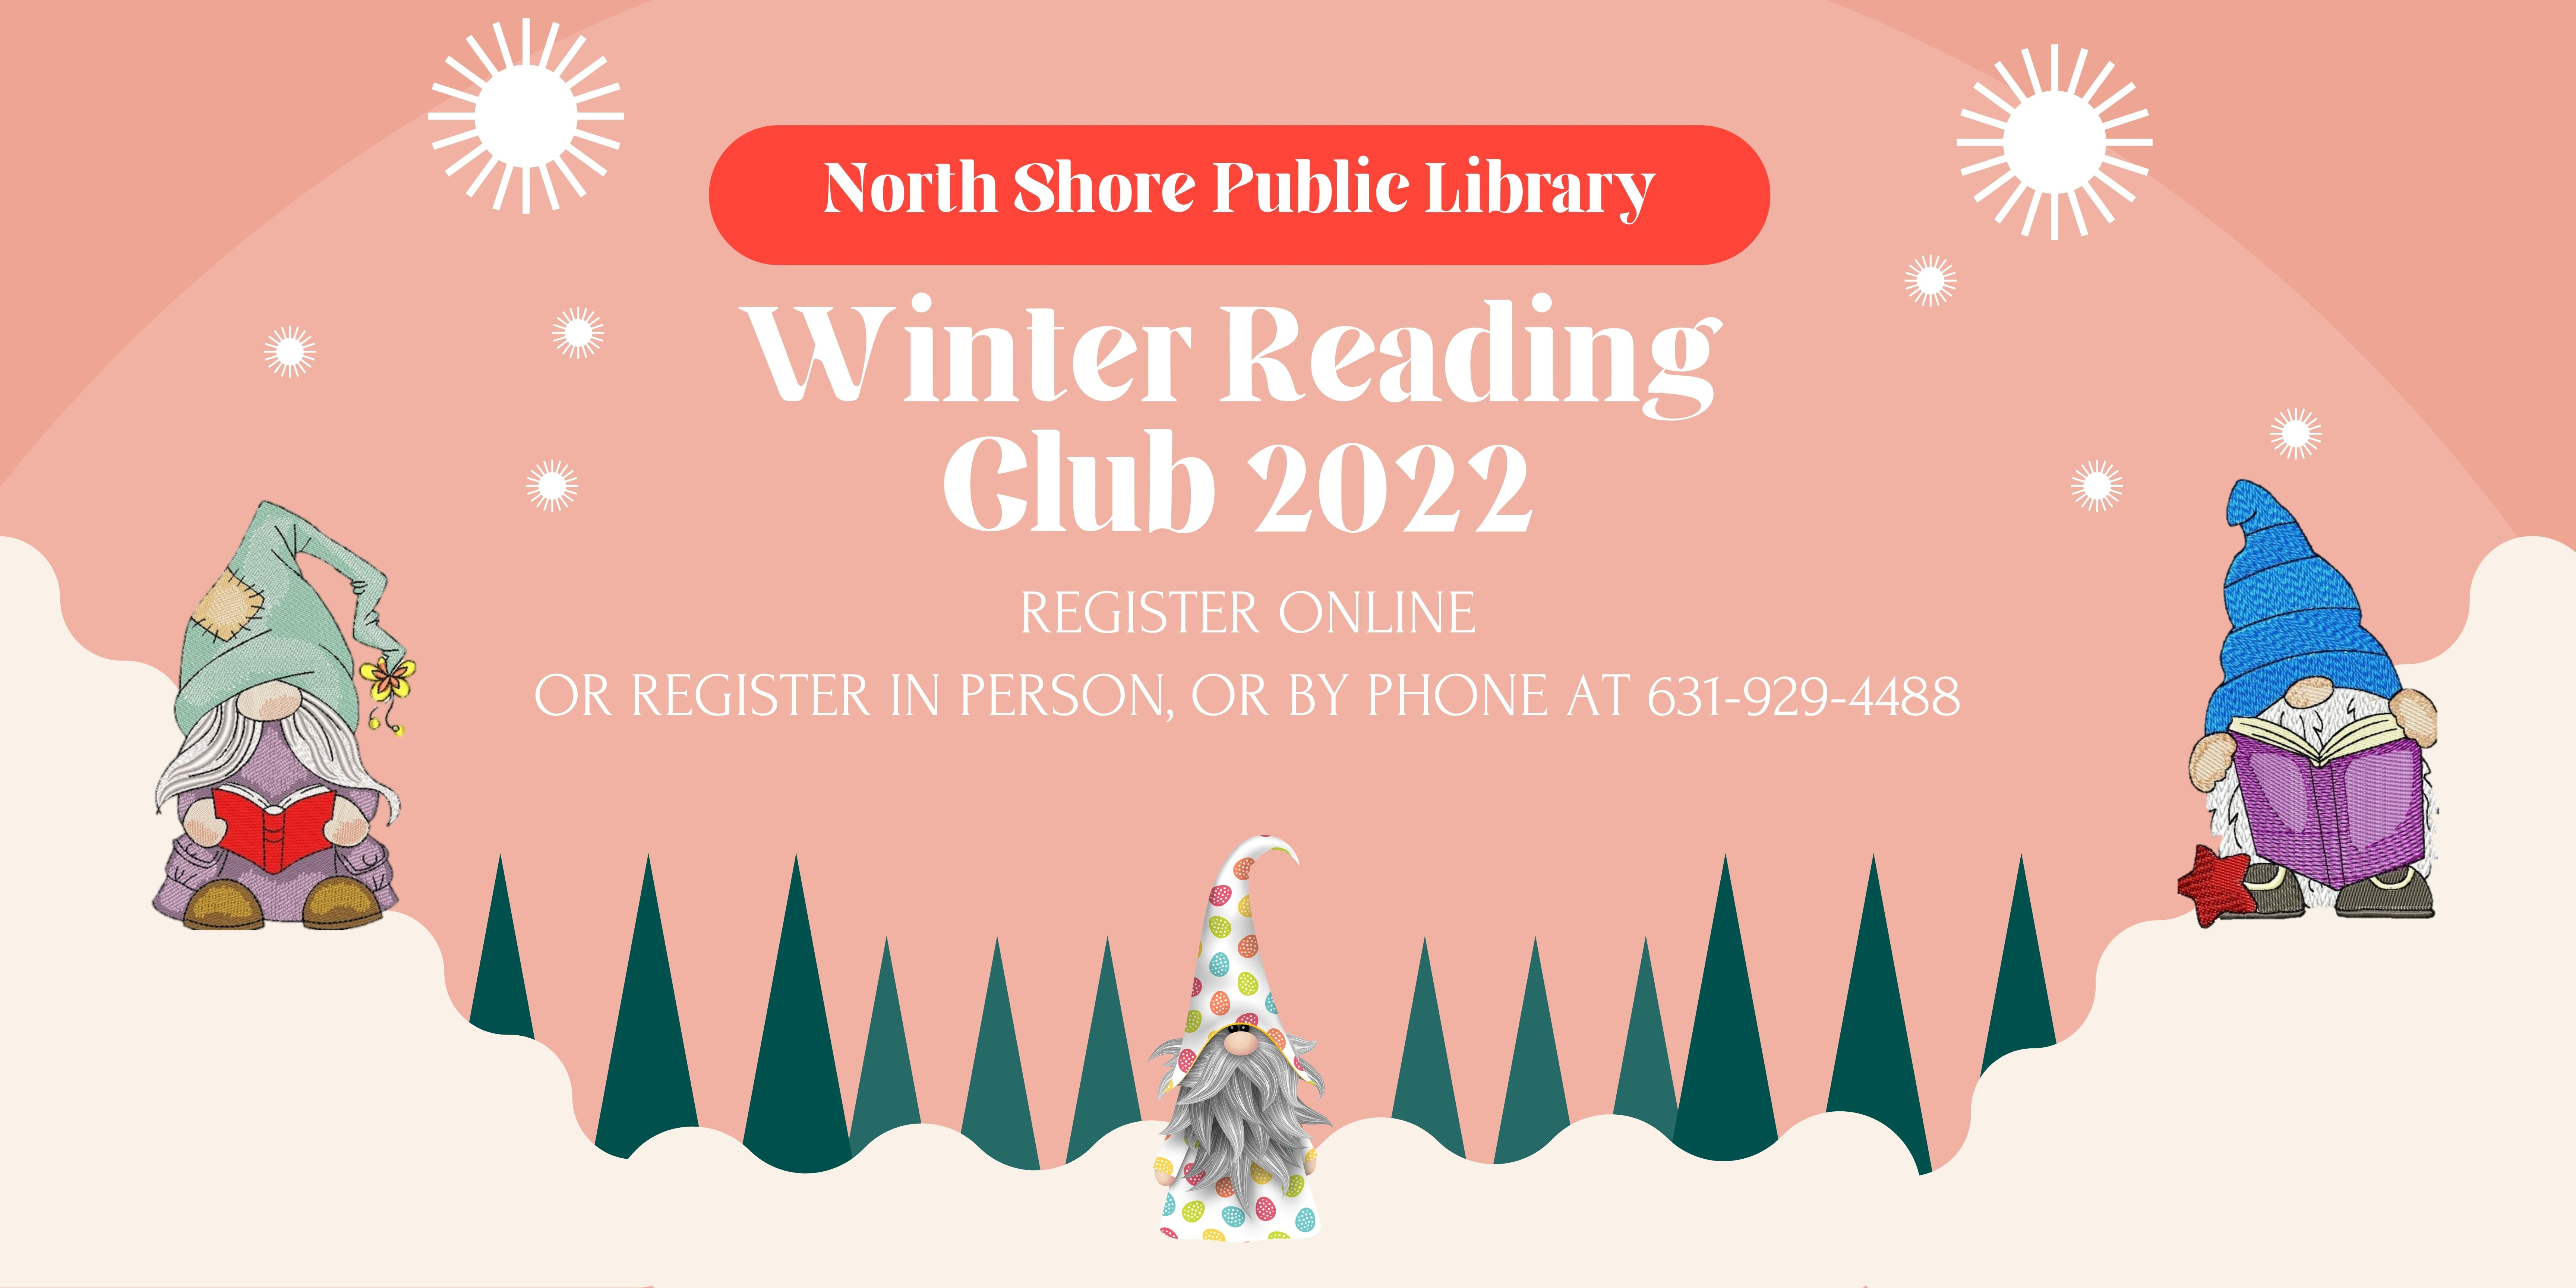 Winter Reading Club 2022